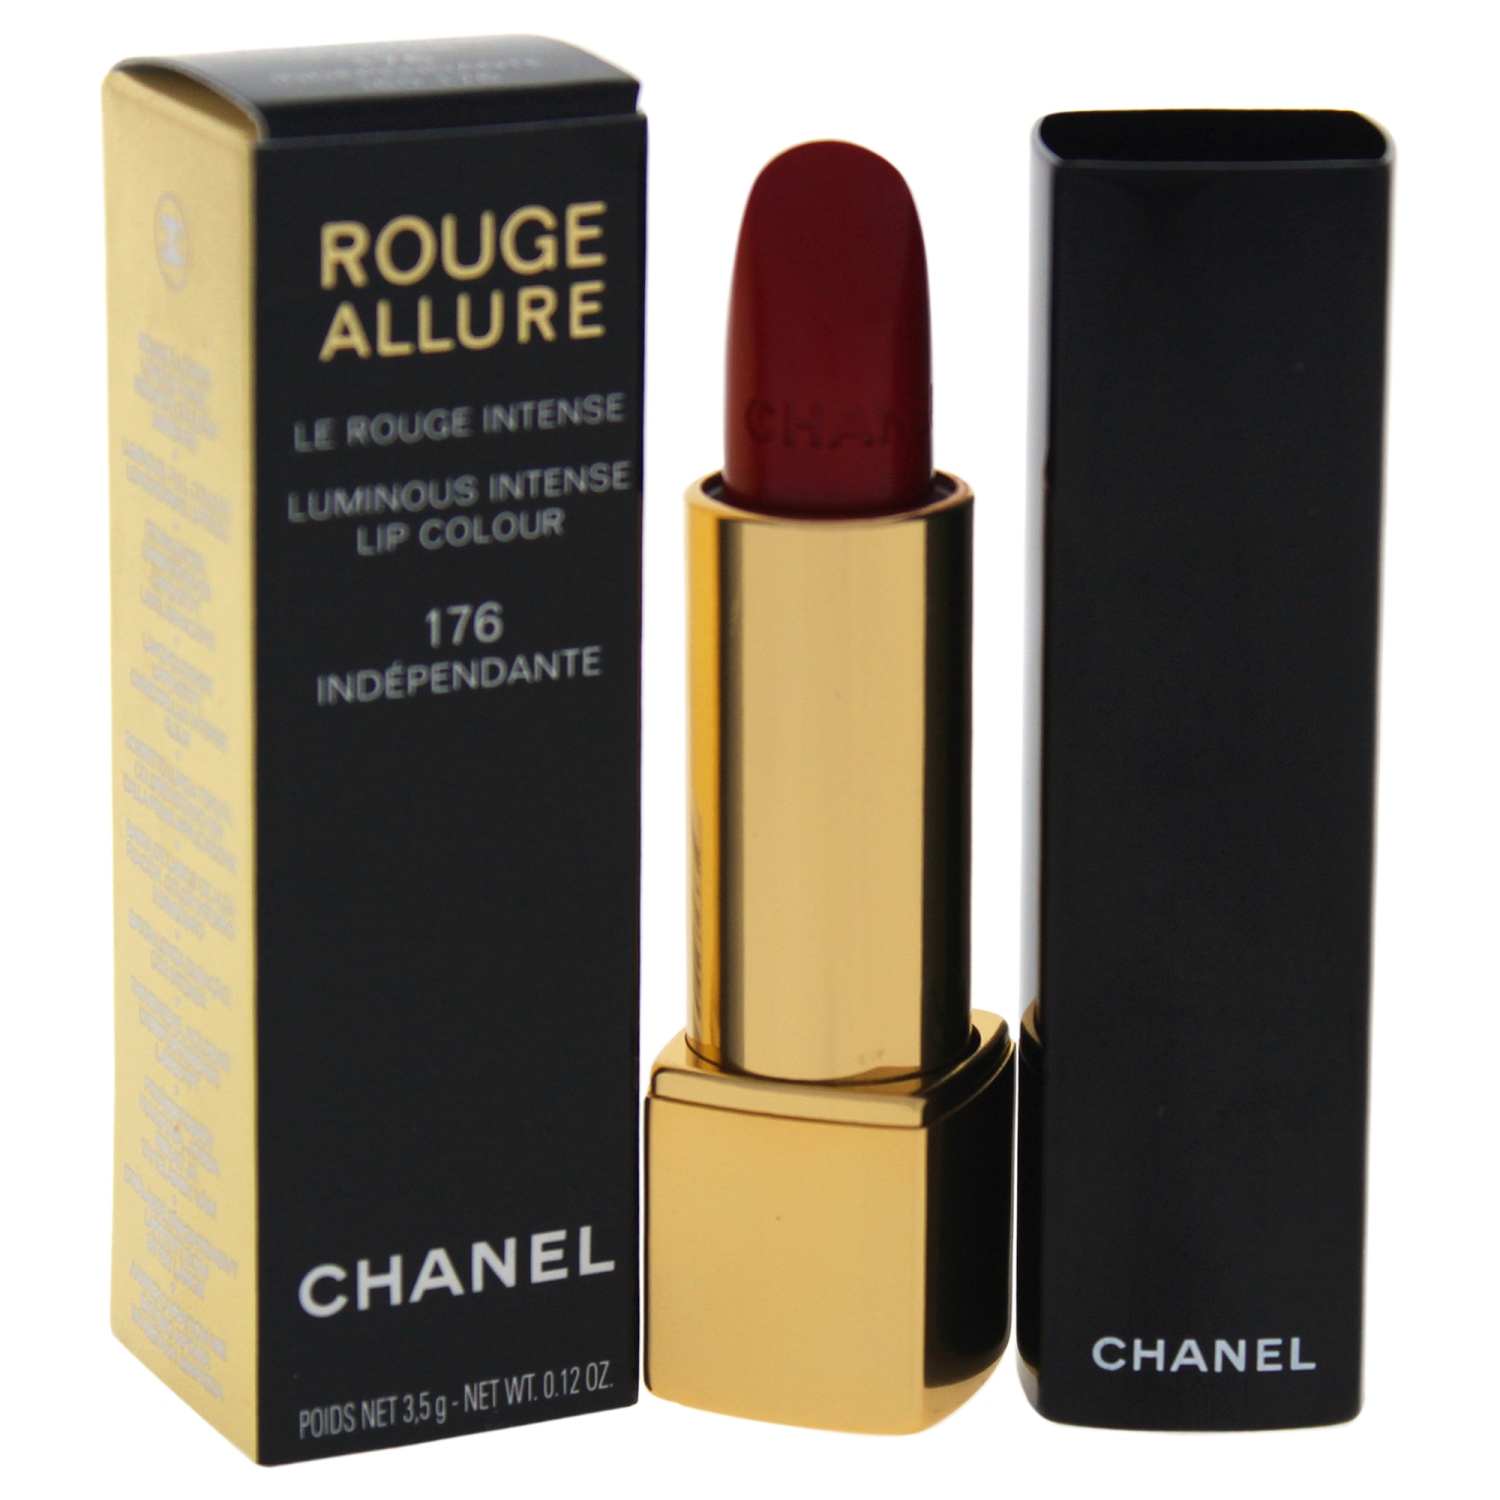 Rouge Allure Luminous Intense Lip Colour - # 176 Independante by Chanel for Women - 0.12 oz Lipstick